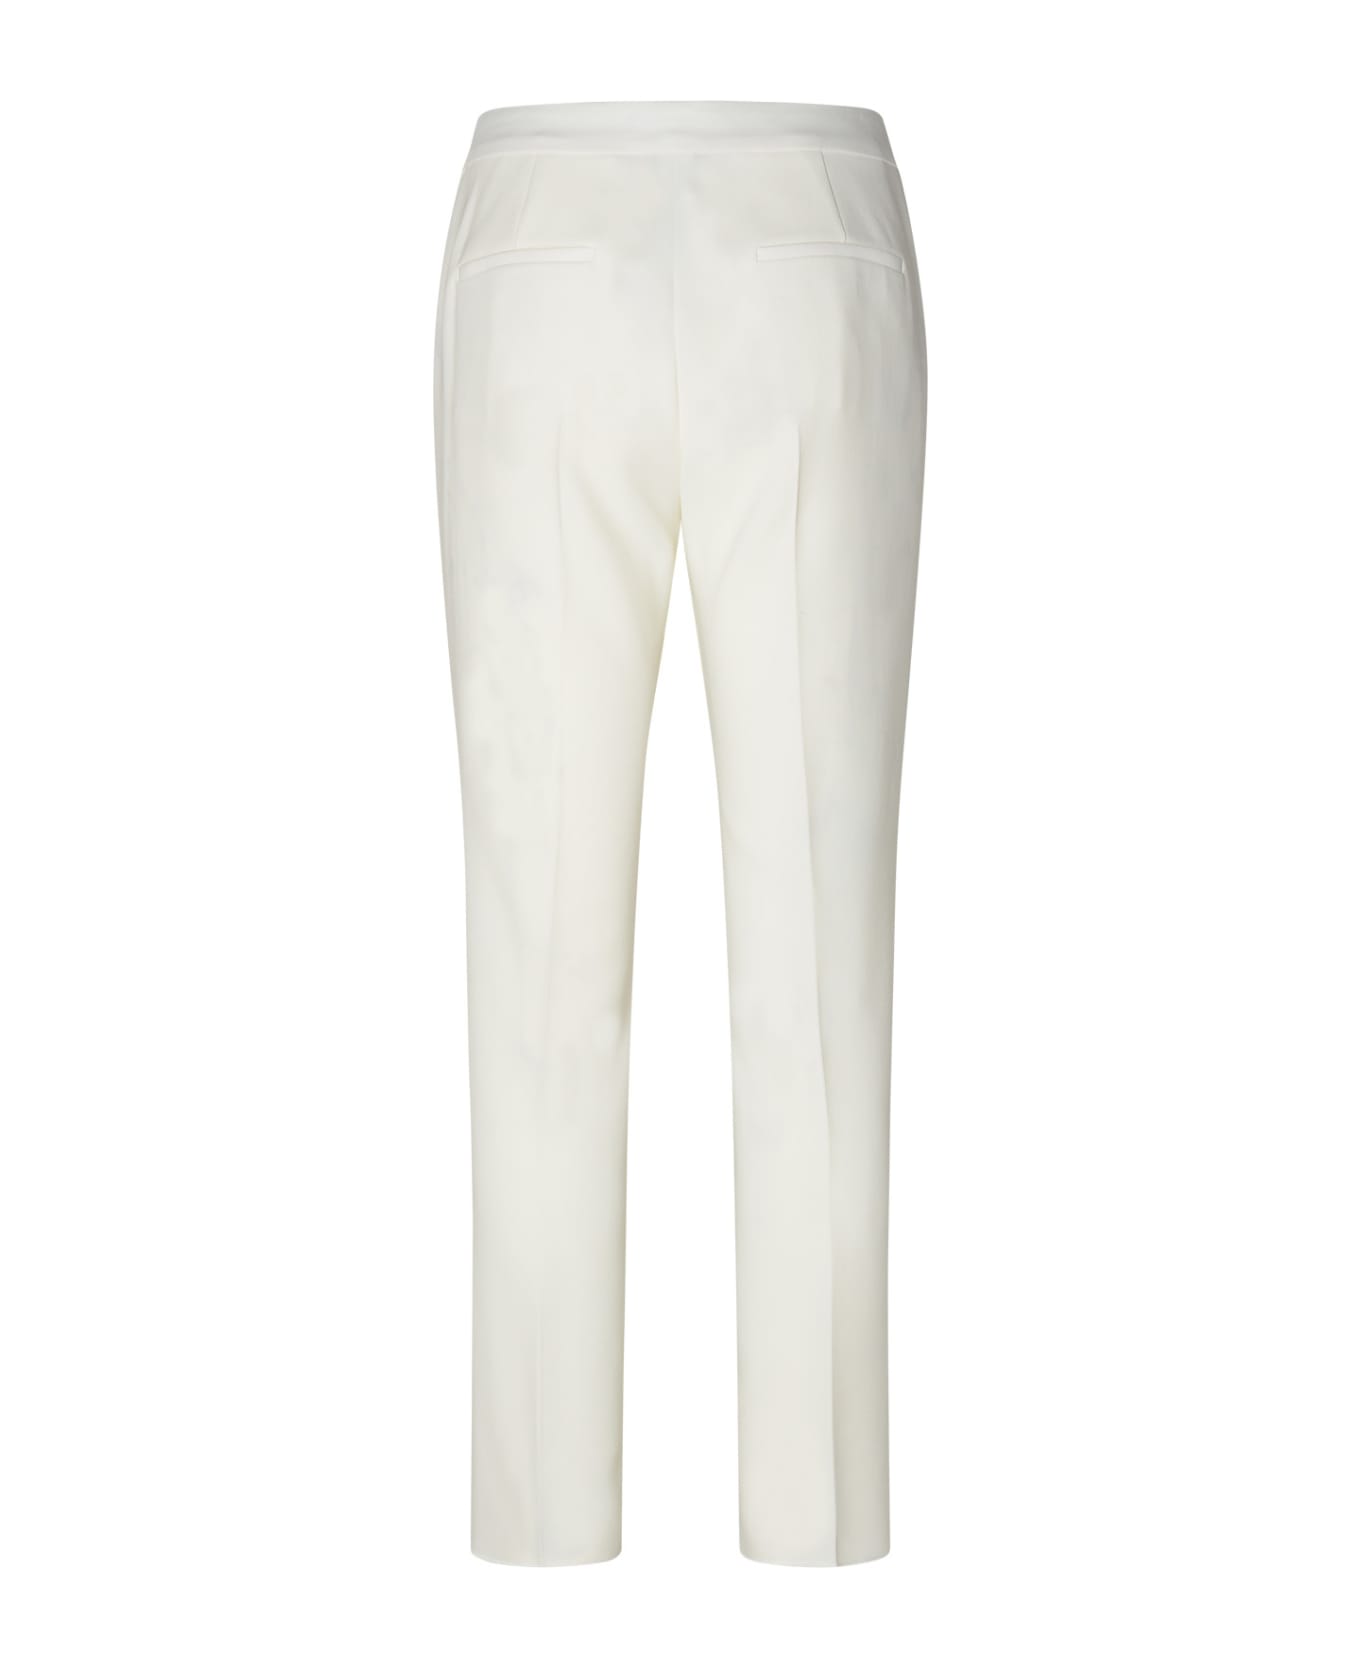 Max Mara White Triacetate Blend Trousers - White